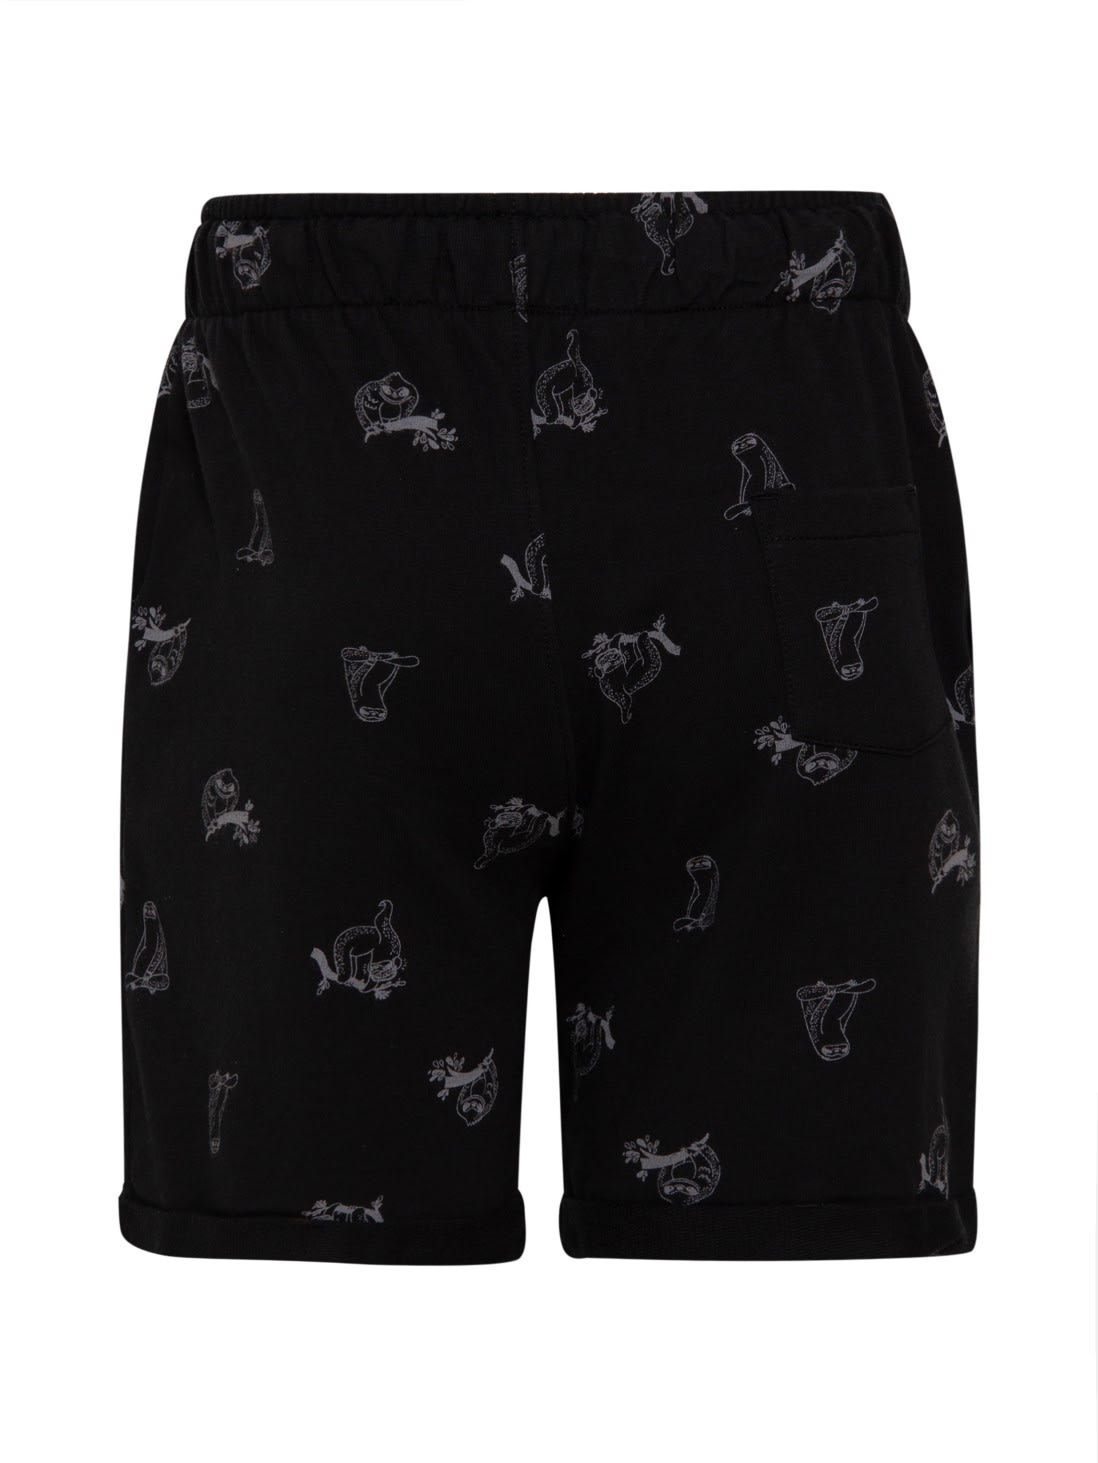 Buy Black Printed Shorts for Boys with Side Pocket & Drawstring Closure ...